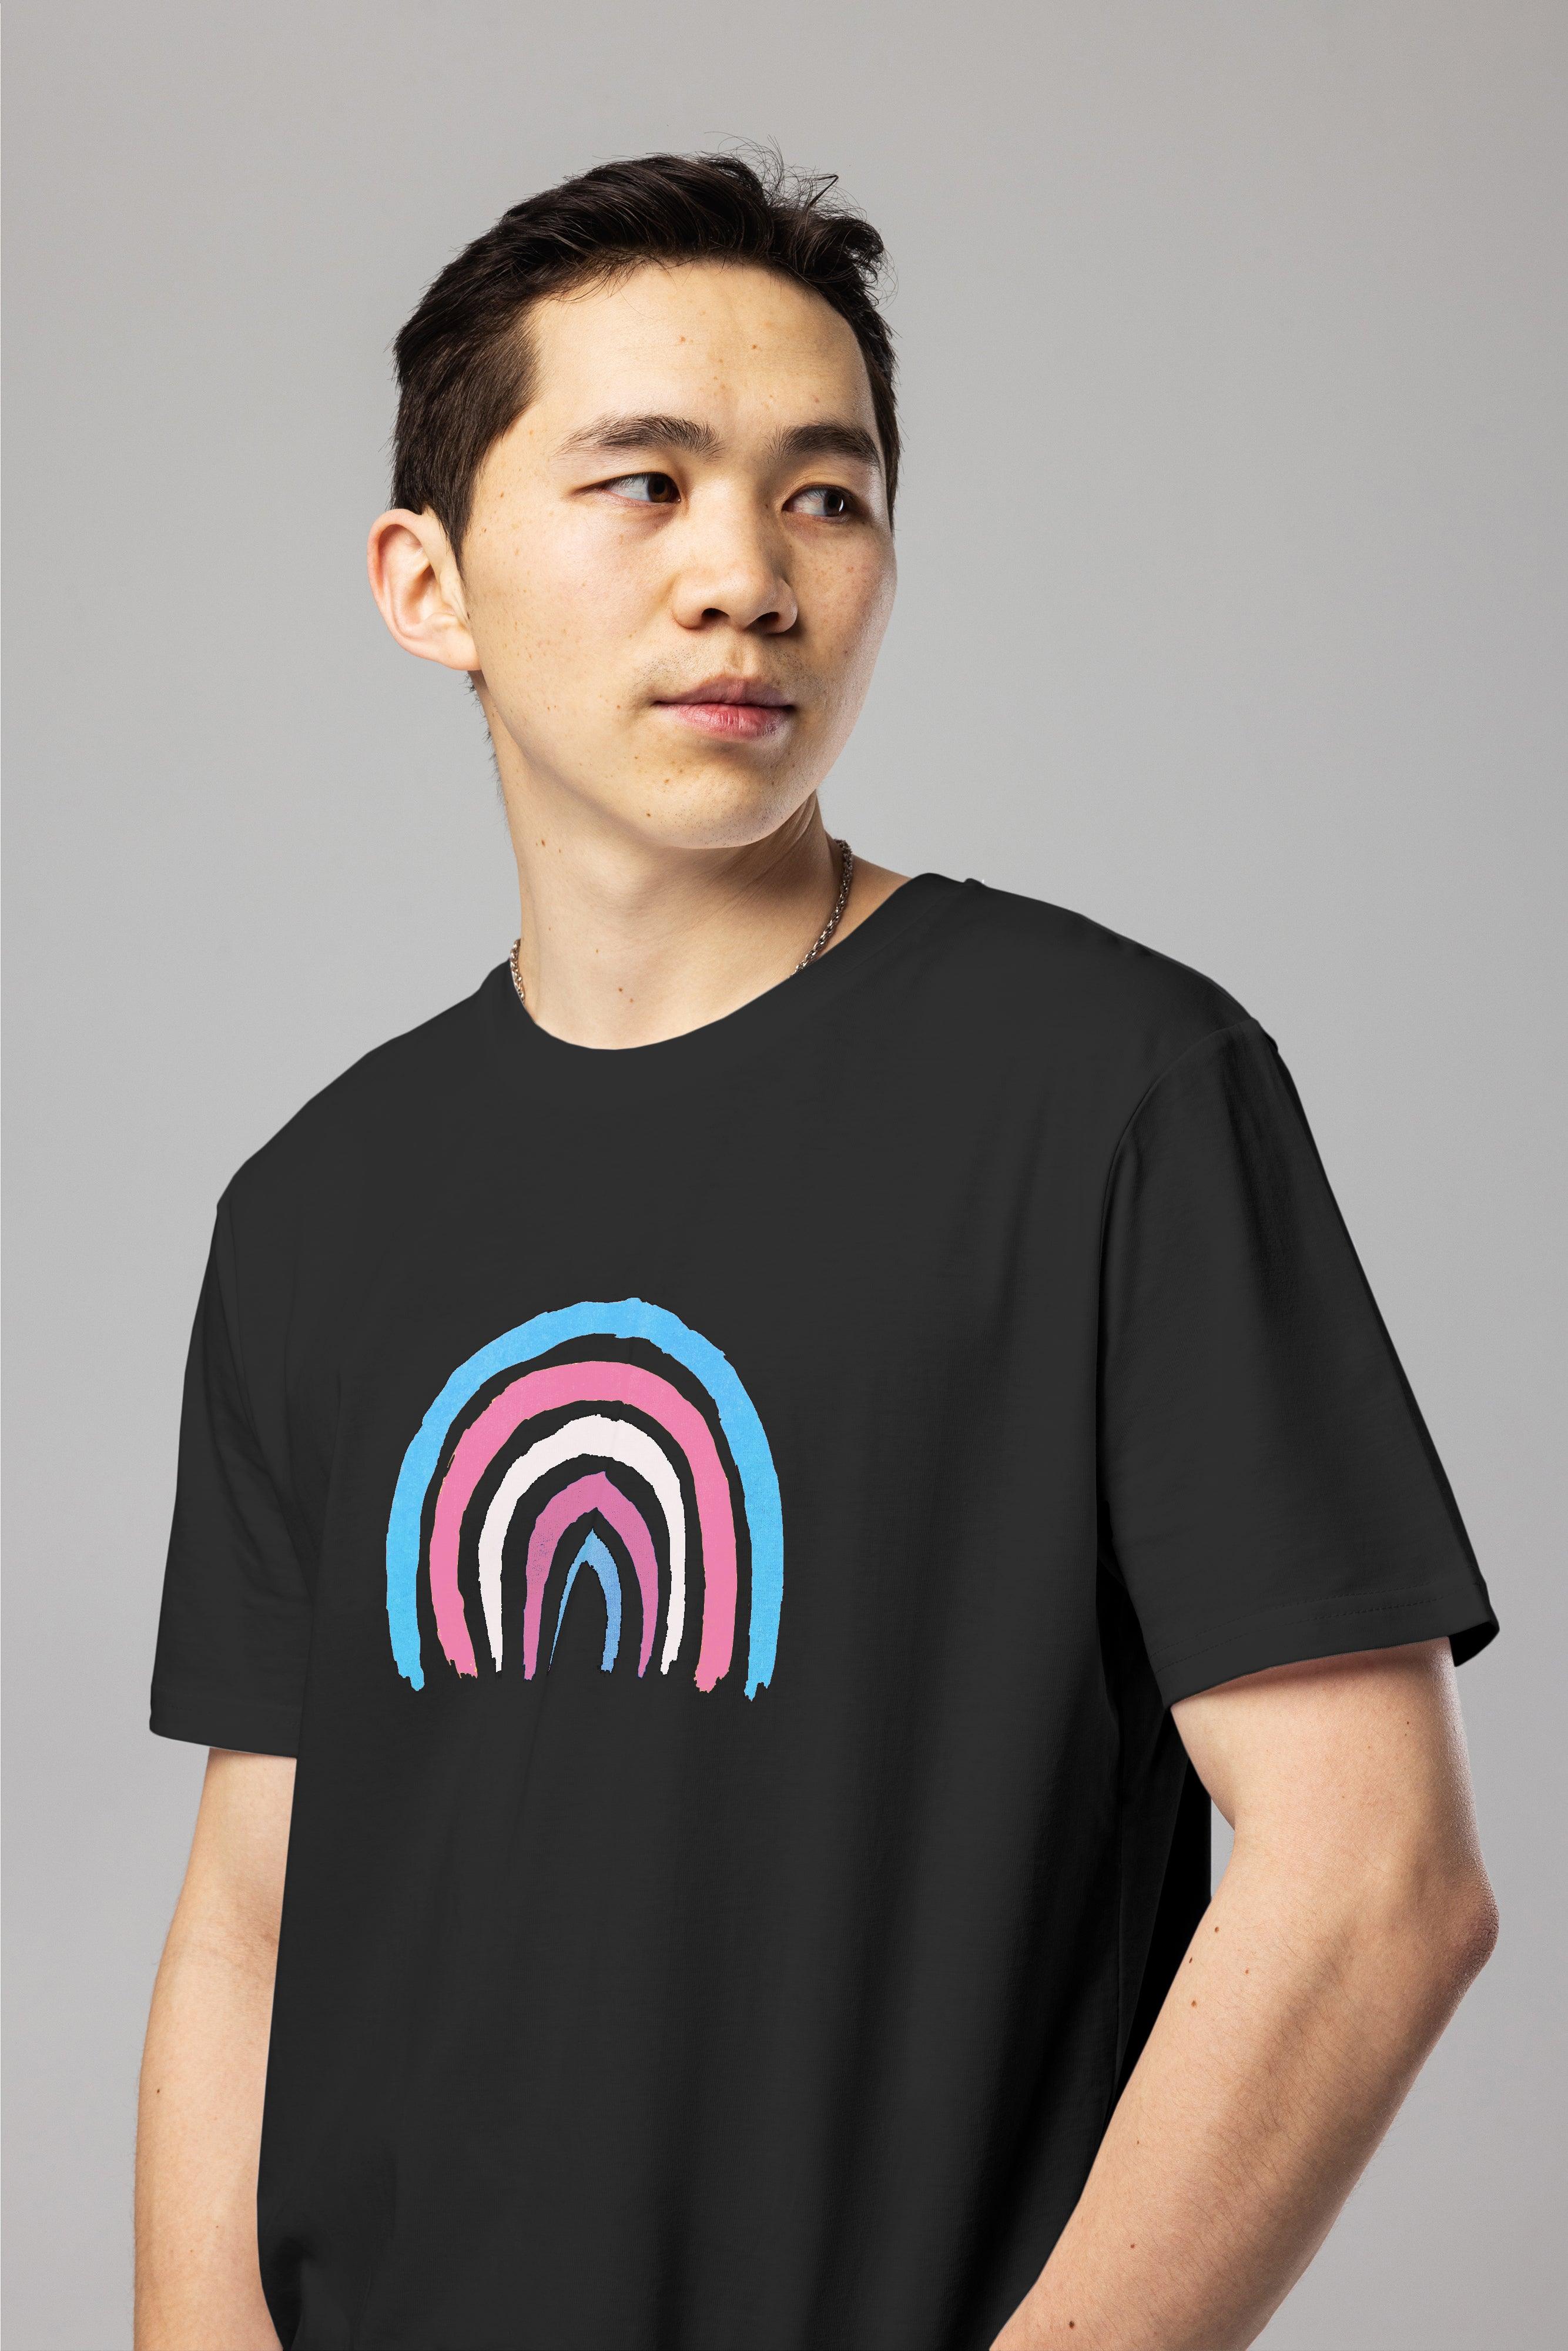 Transgender Rainbow T-Shirt | T-shirt | pitod.com